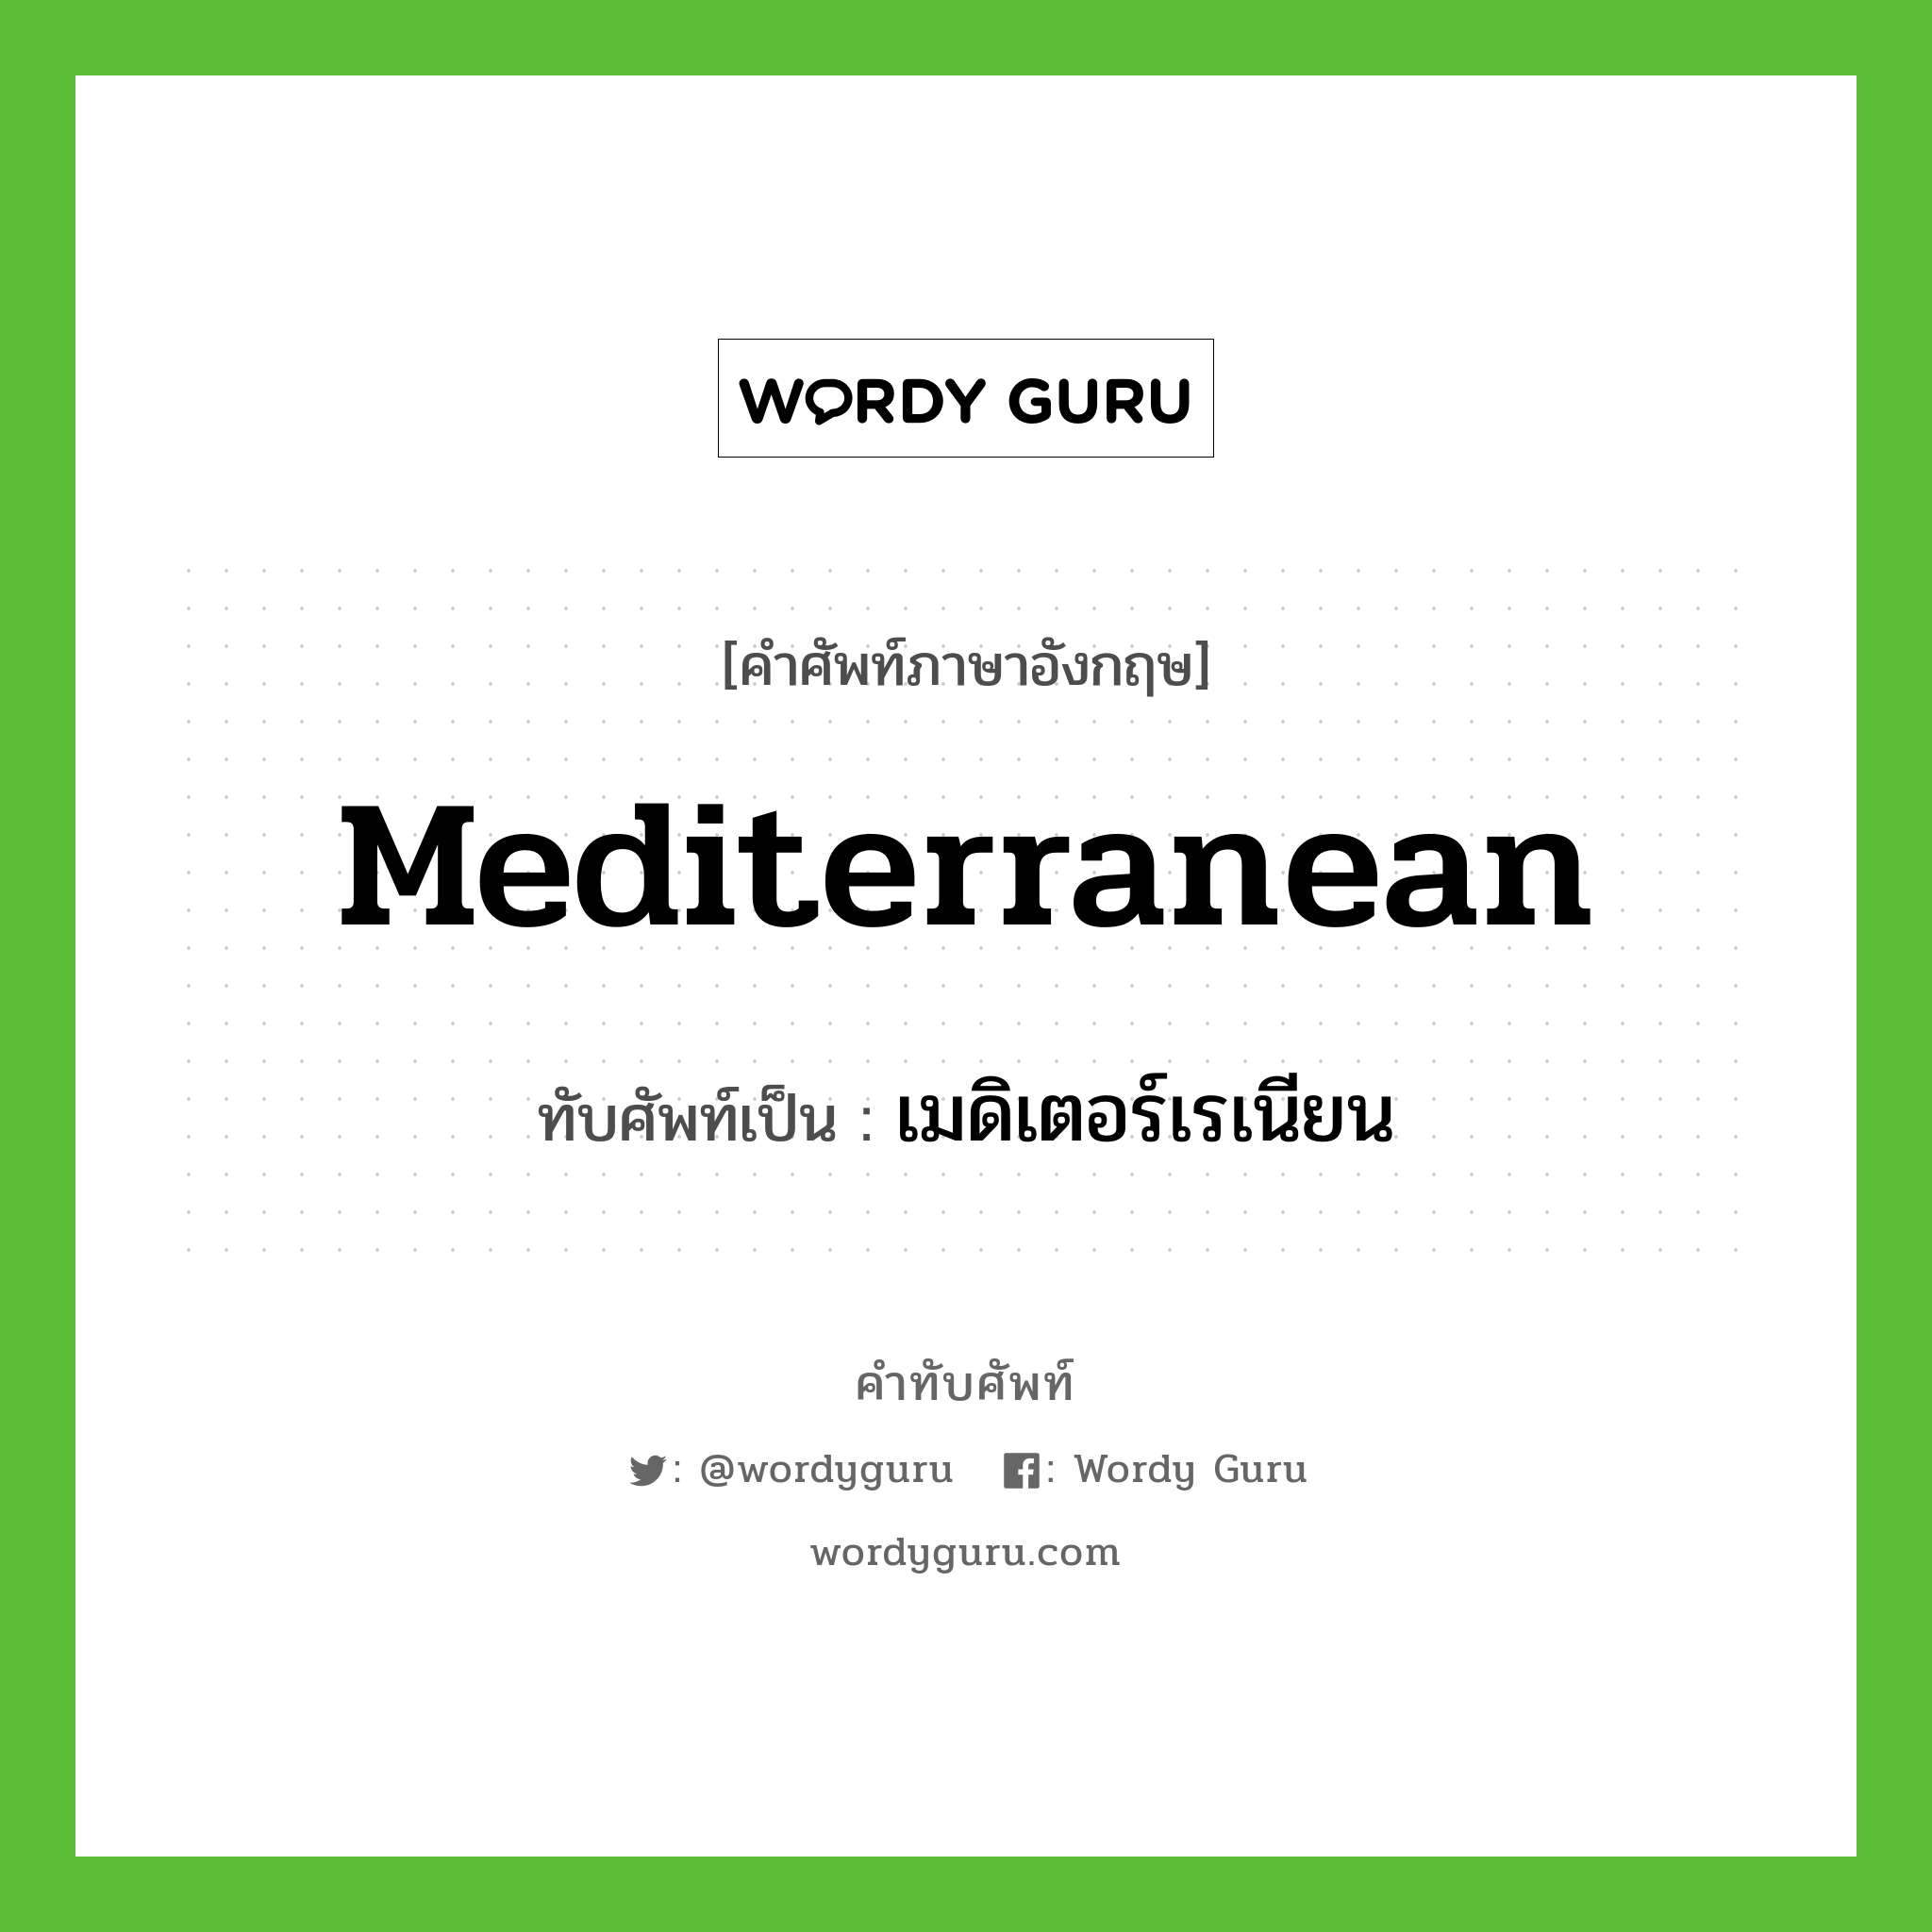 Mediterranean เขียนเป็นคำไทยว่าอะไร?, คำศัพท์ภาษาอังกฤษ Mediterranean ทับศัพท์เป็น เมดิเตอร์เรเนียน